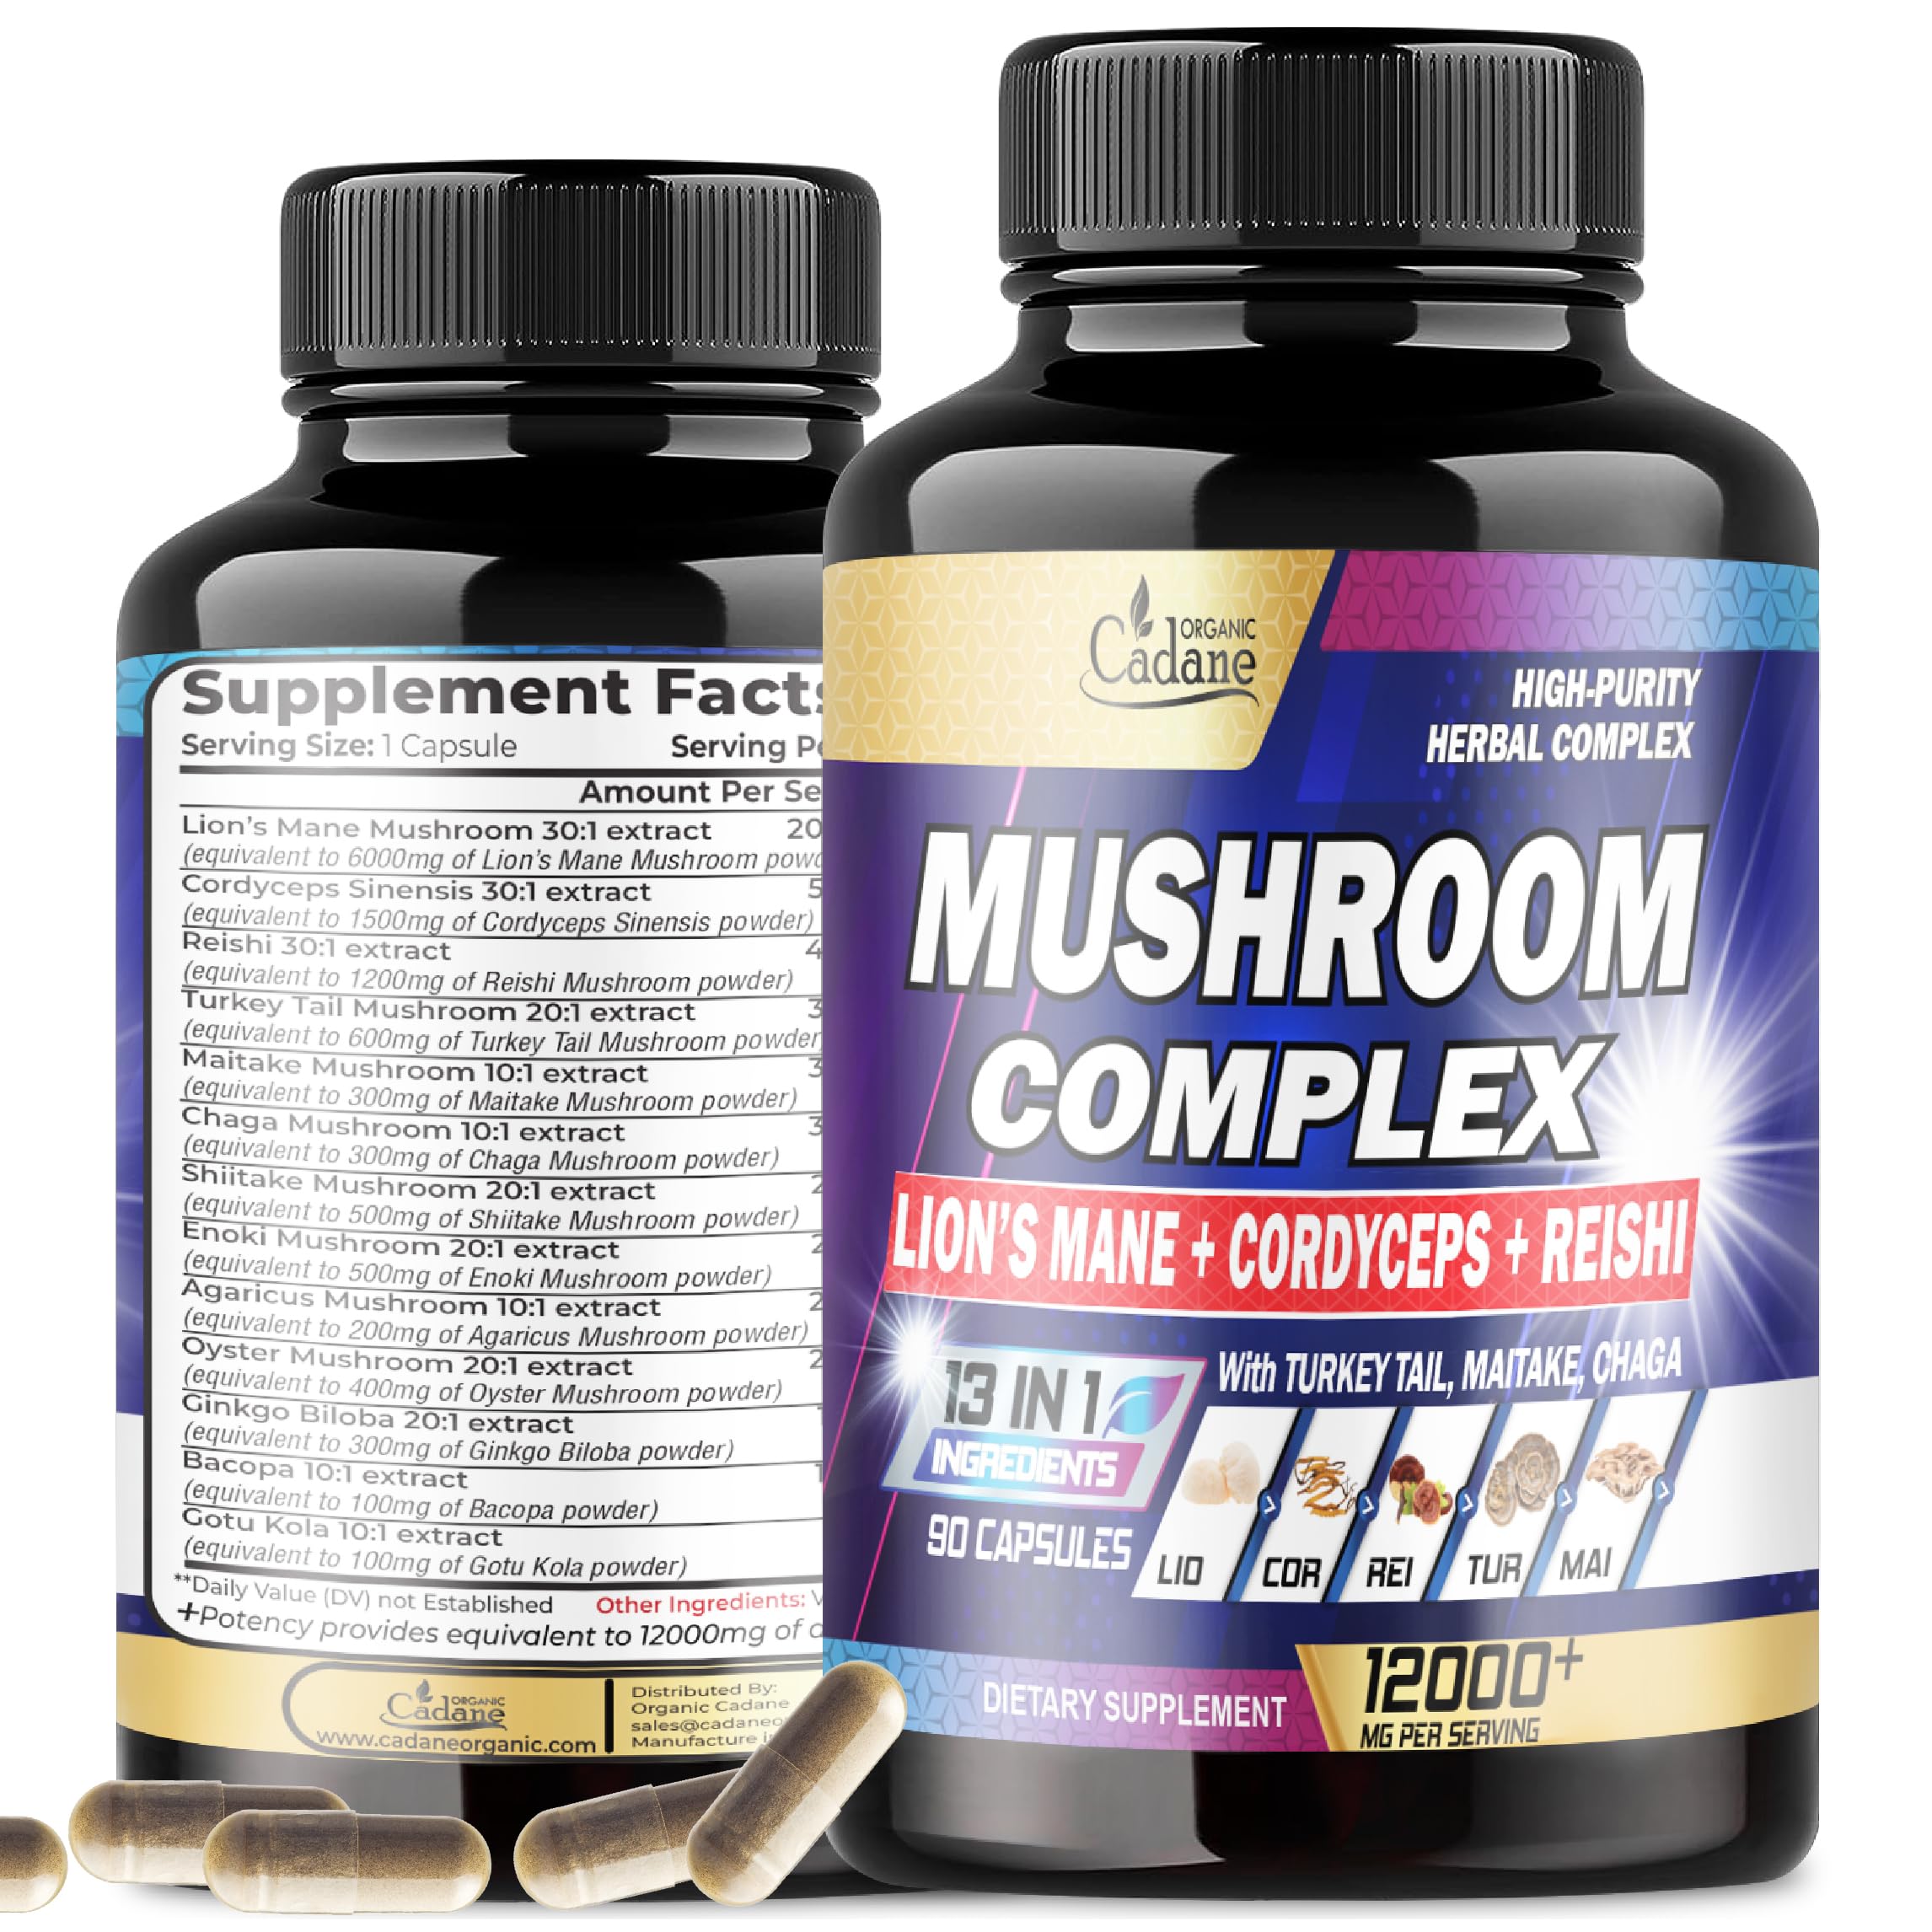 Incorporate Mushroom Supplements